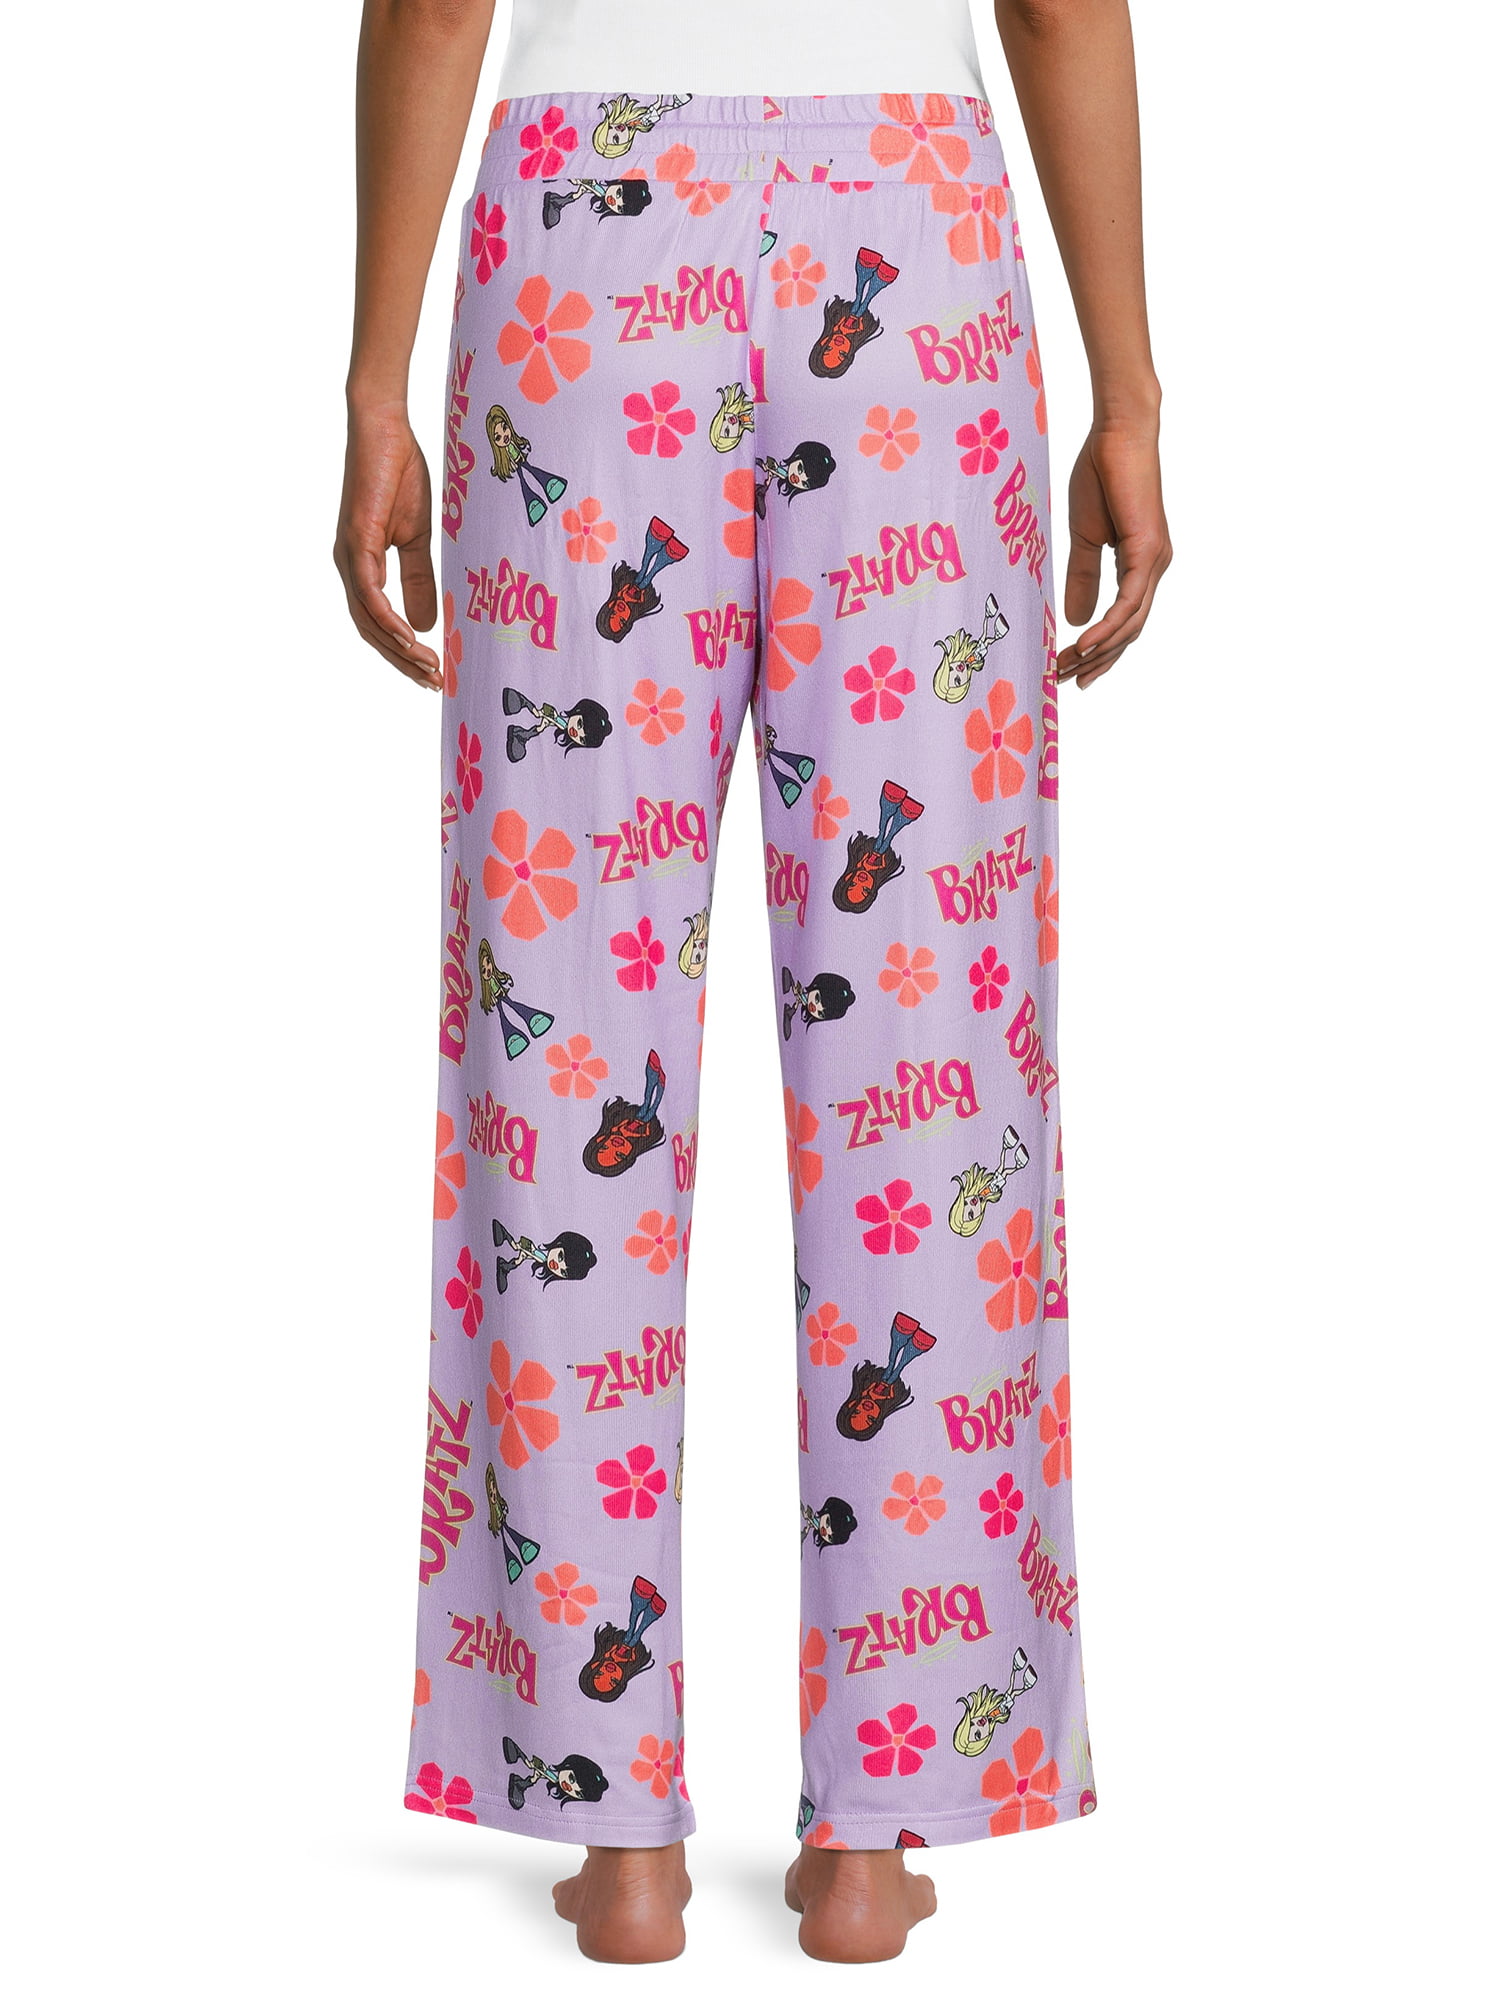 Love Xoxo Valentine's Day Women's Pajama Pants Sleepwear Yoga Pant  Drawstring Lounge Bottoms XS at Amazon Women's Clothing store